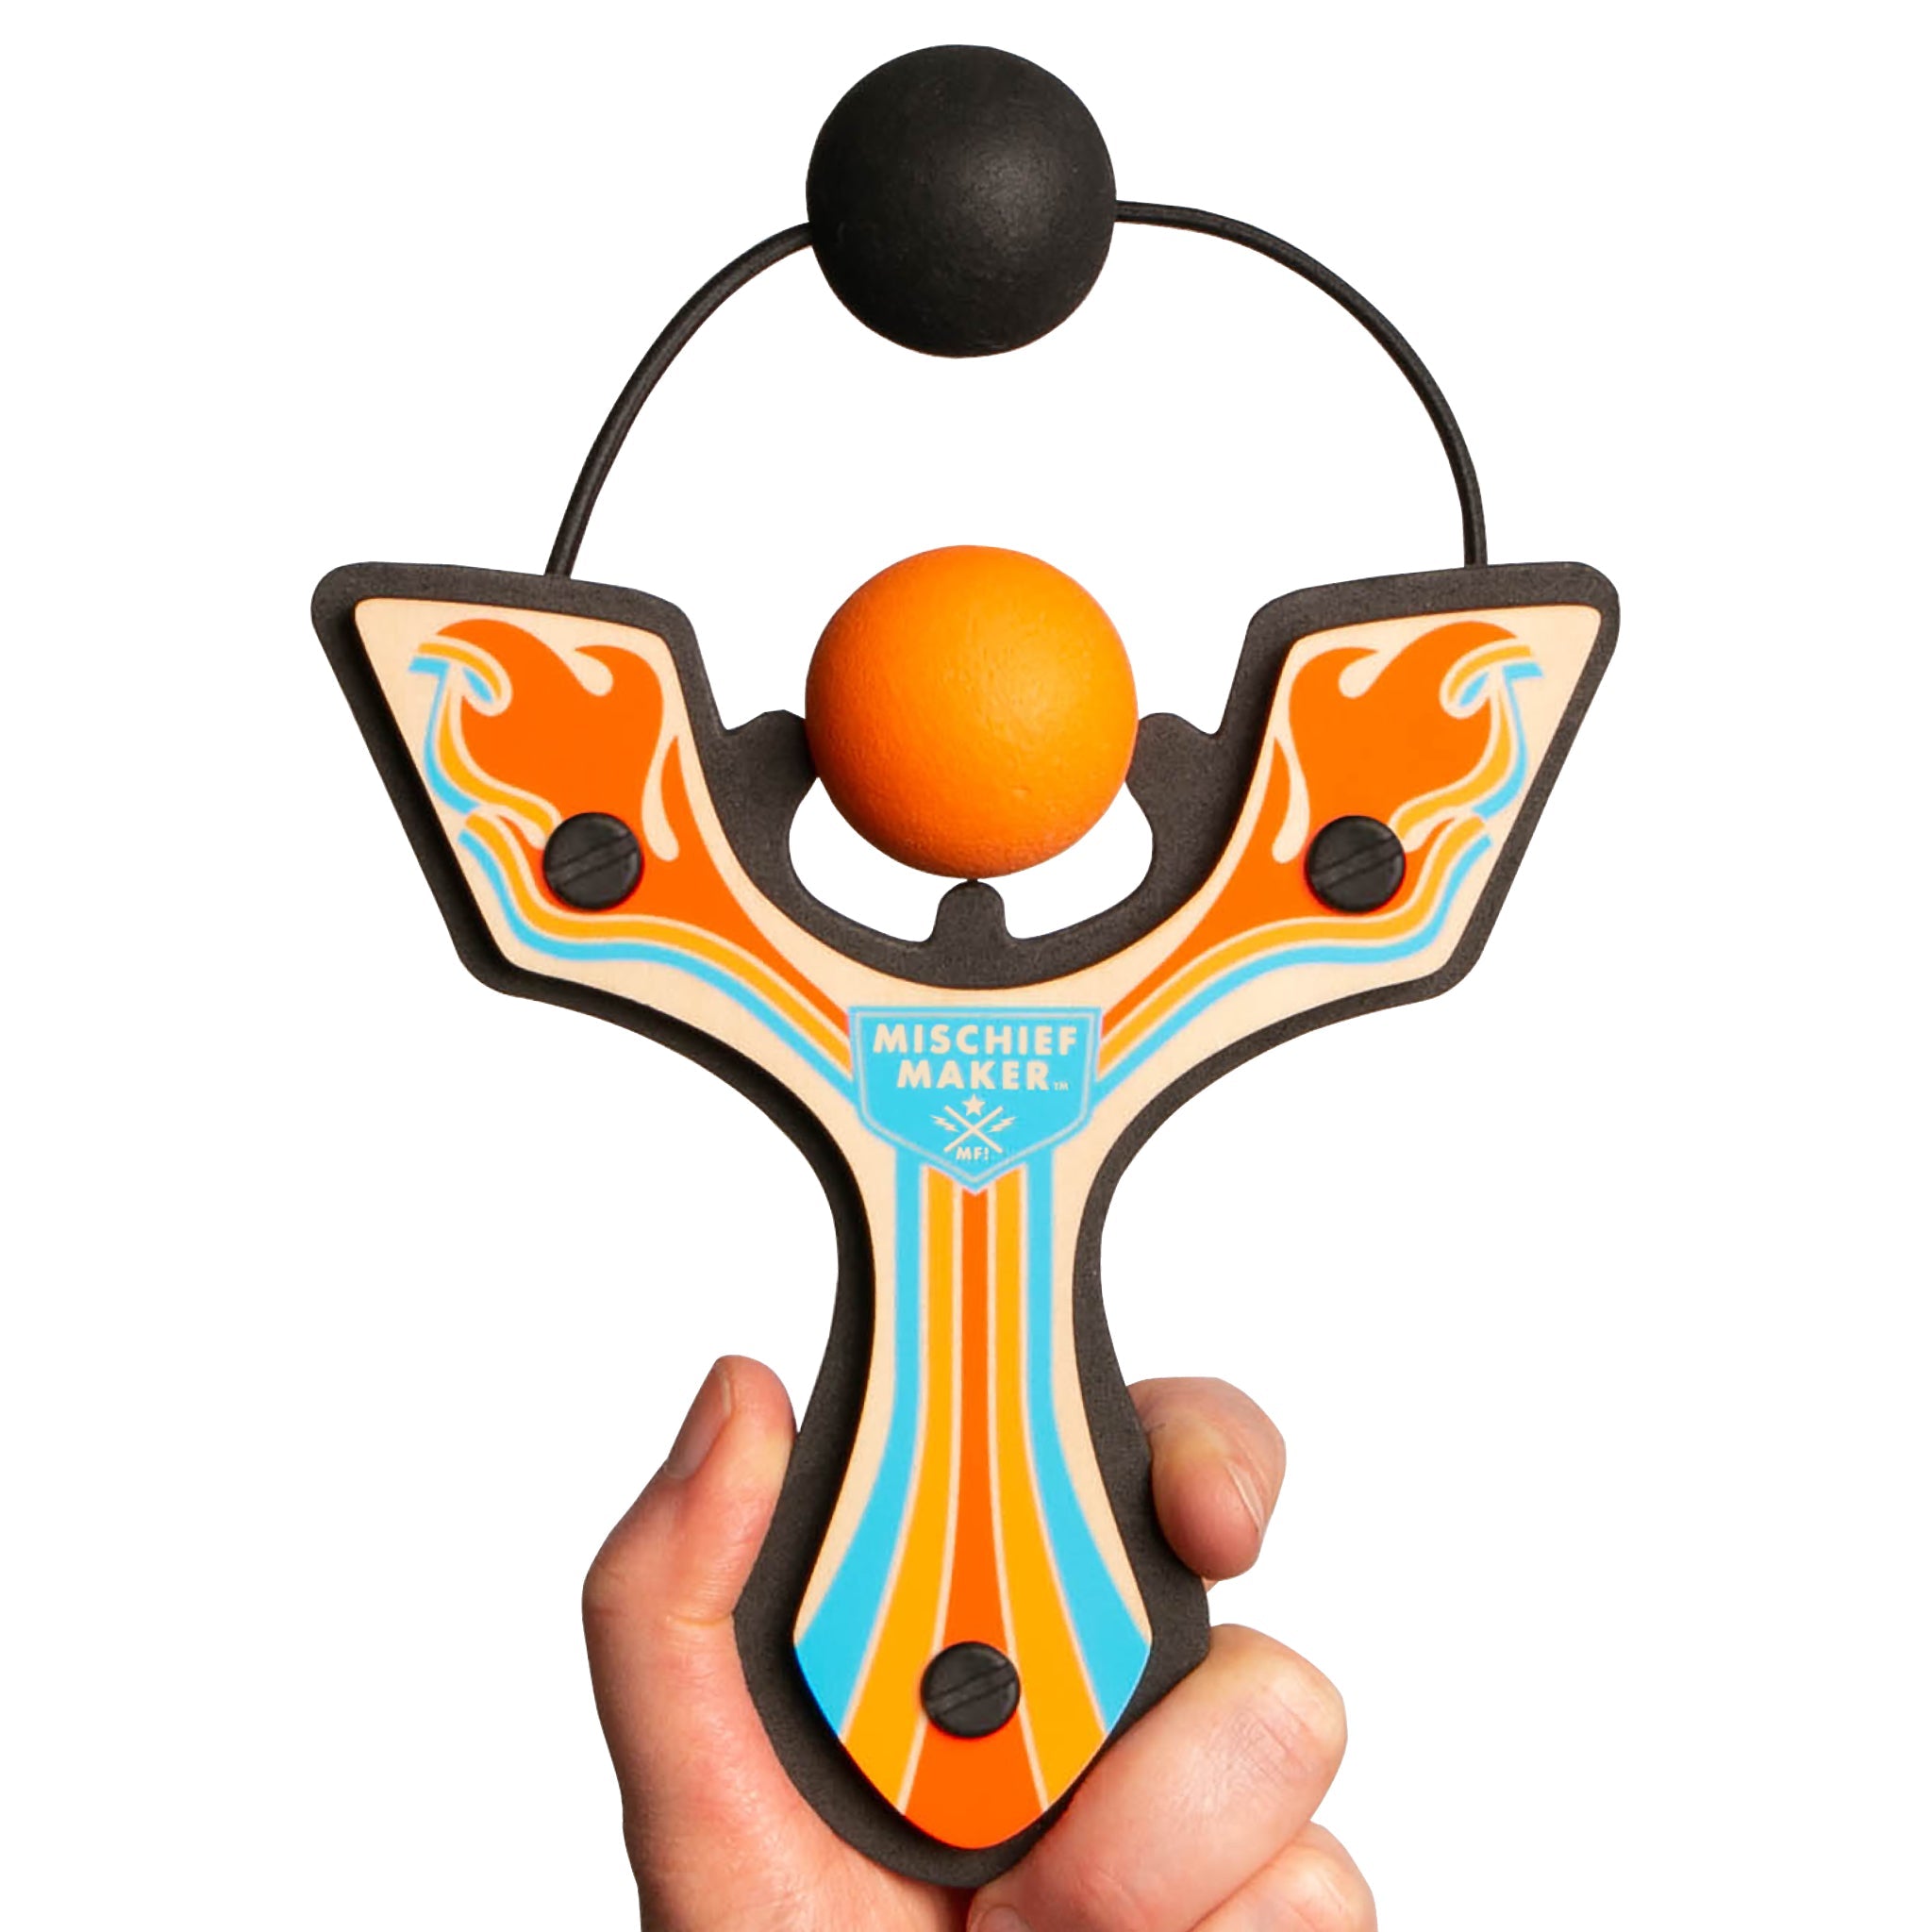 Orange Racing best slingshot hand held with ball foam ball. Mischief Maker by Mighty Fun!